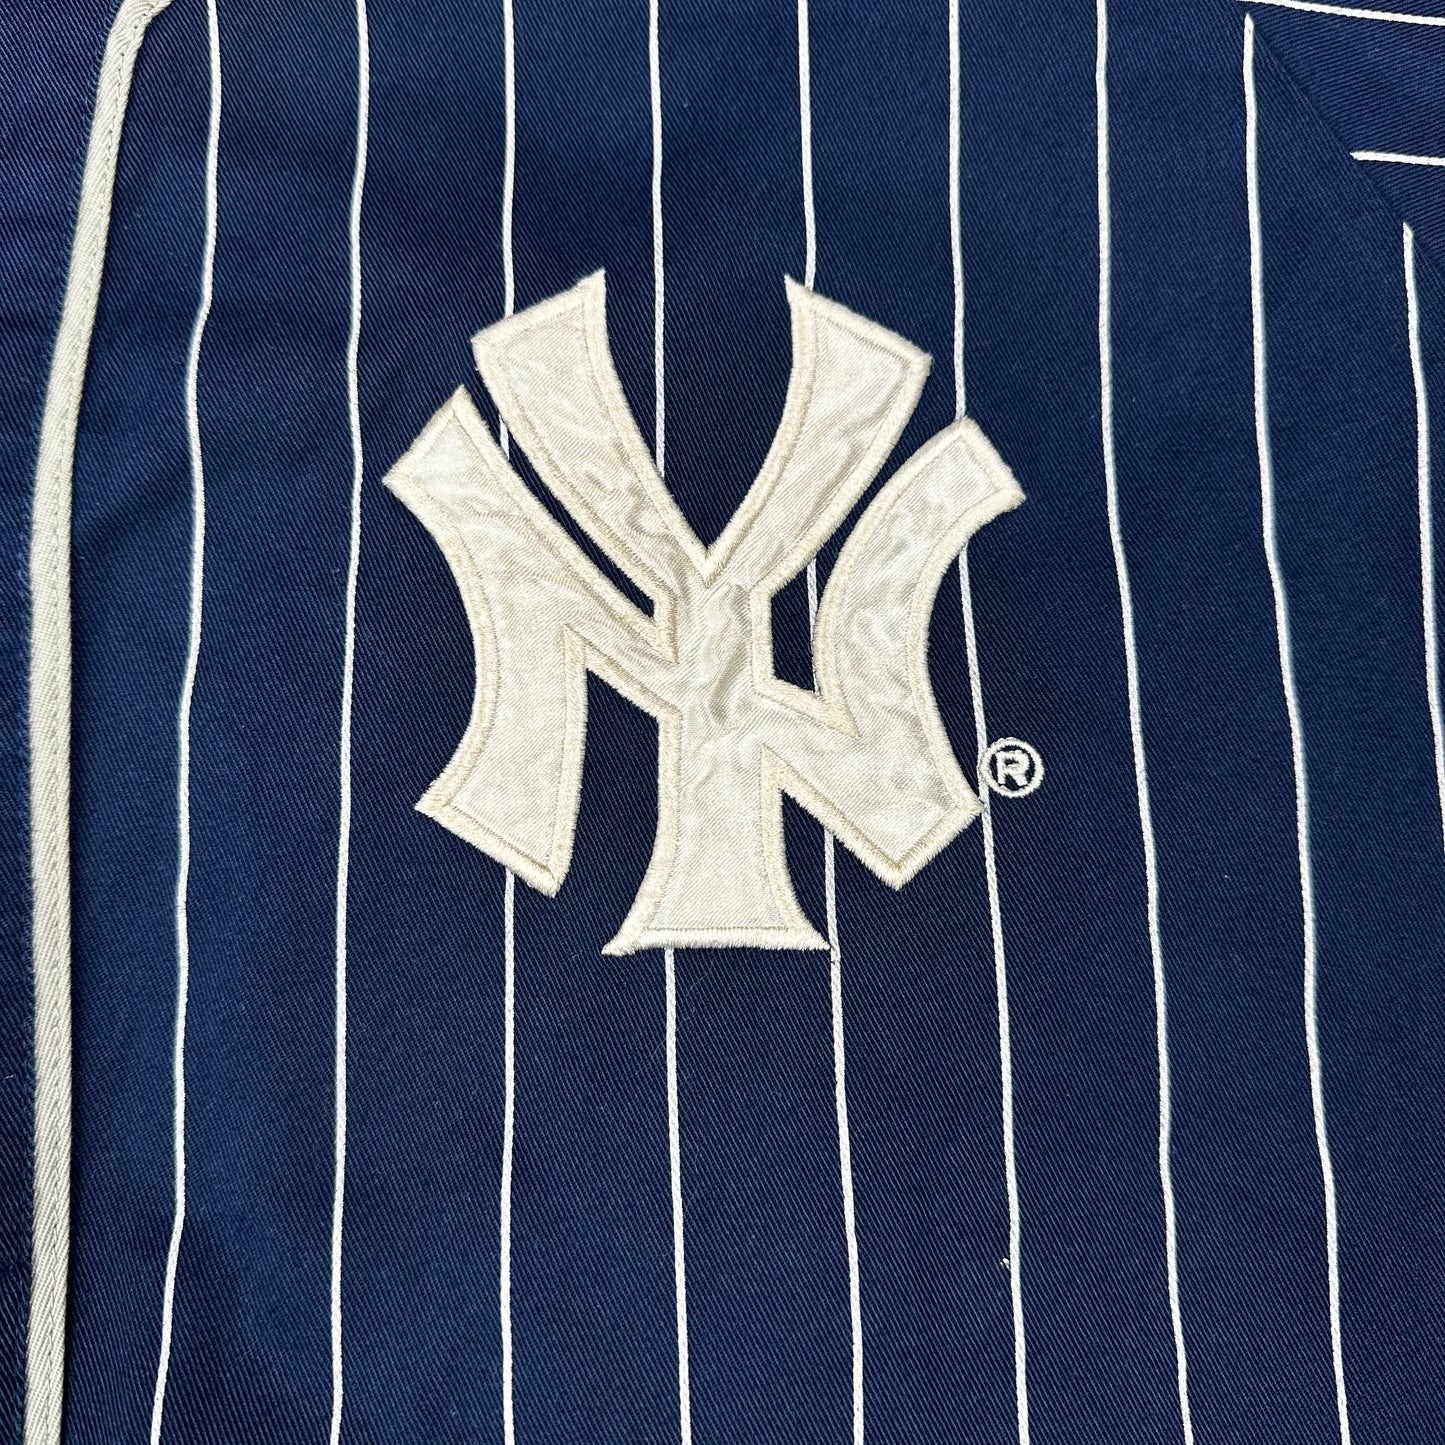 Vintage New York Yankees Navy Blue Starter Pinstripe Jersey